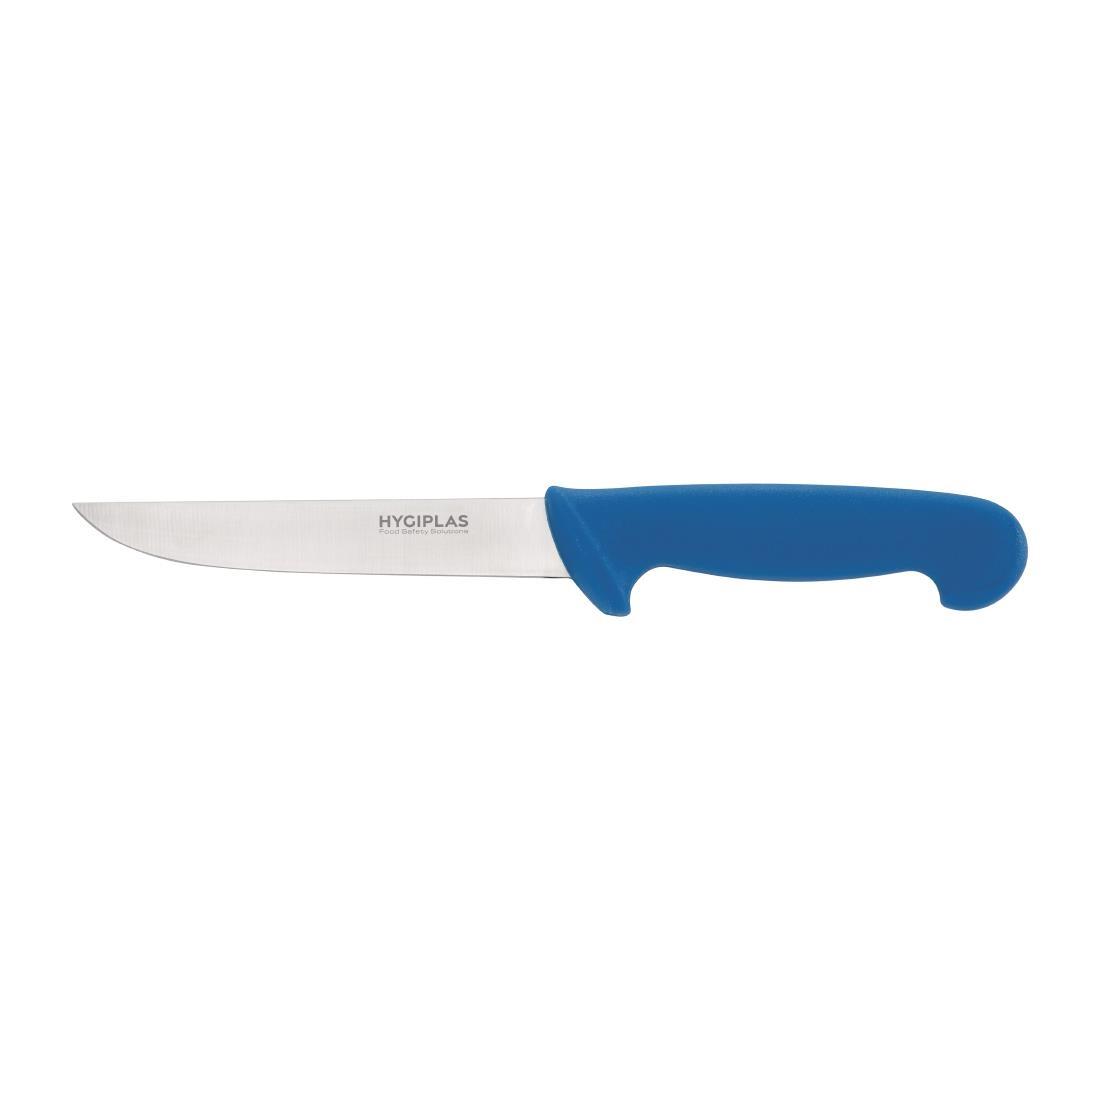 Hygiplas Stiff Blade Boning Knife Blue 15cm - C854  - 2